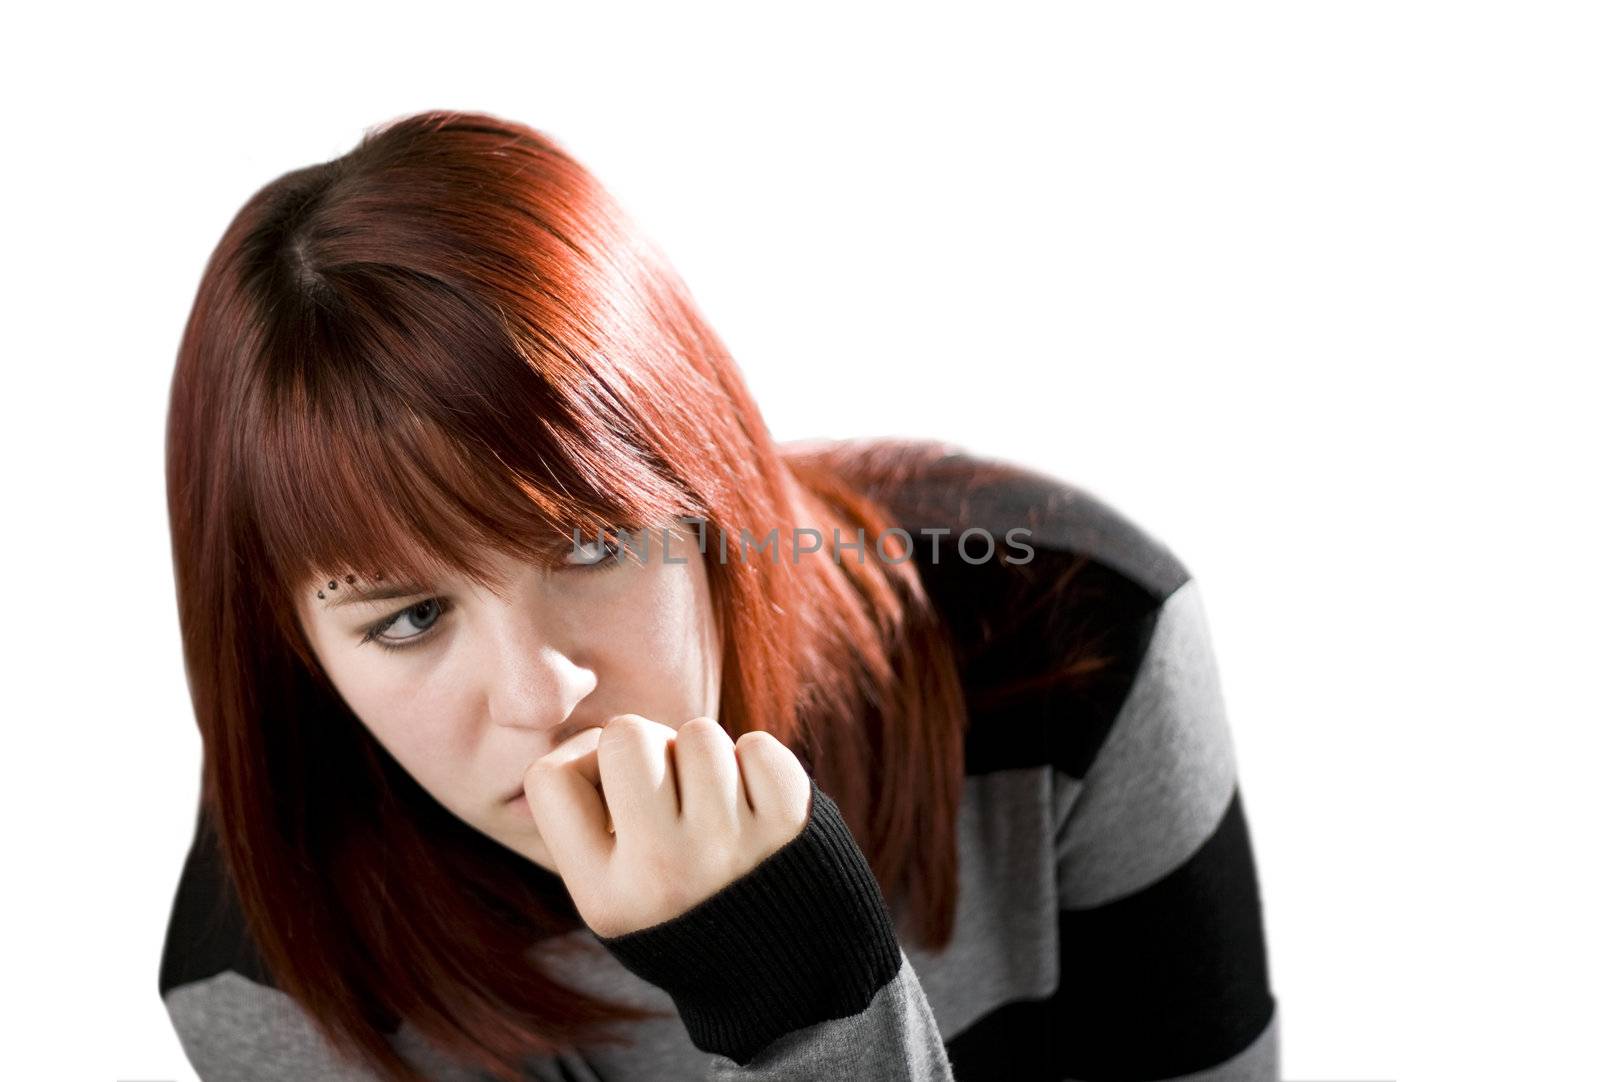 Pensive redhead girl biting nail by domencolja